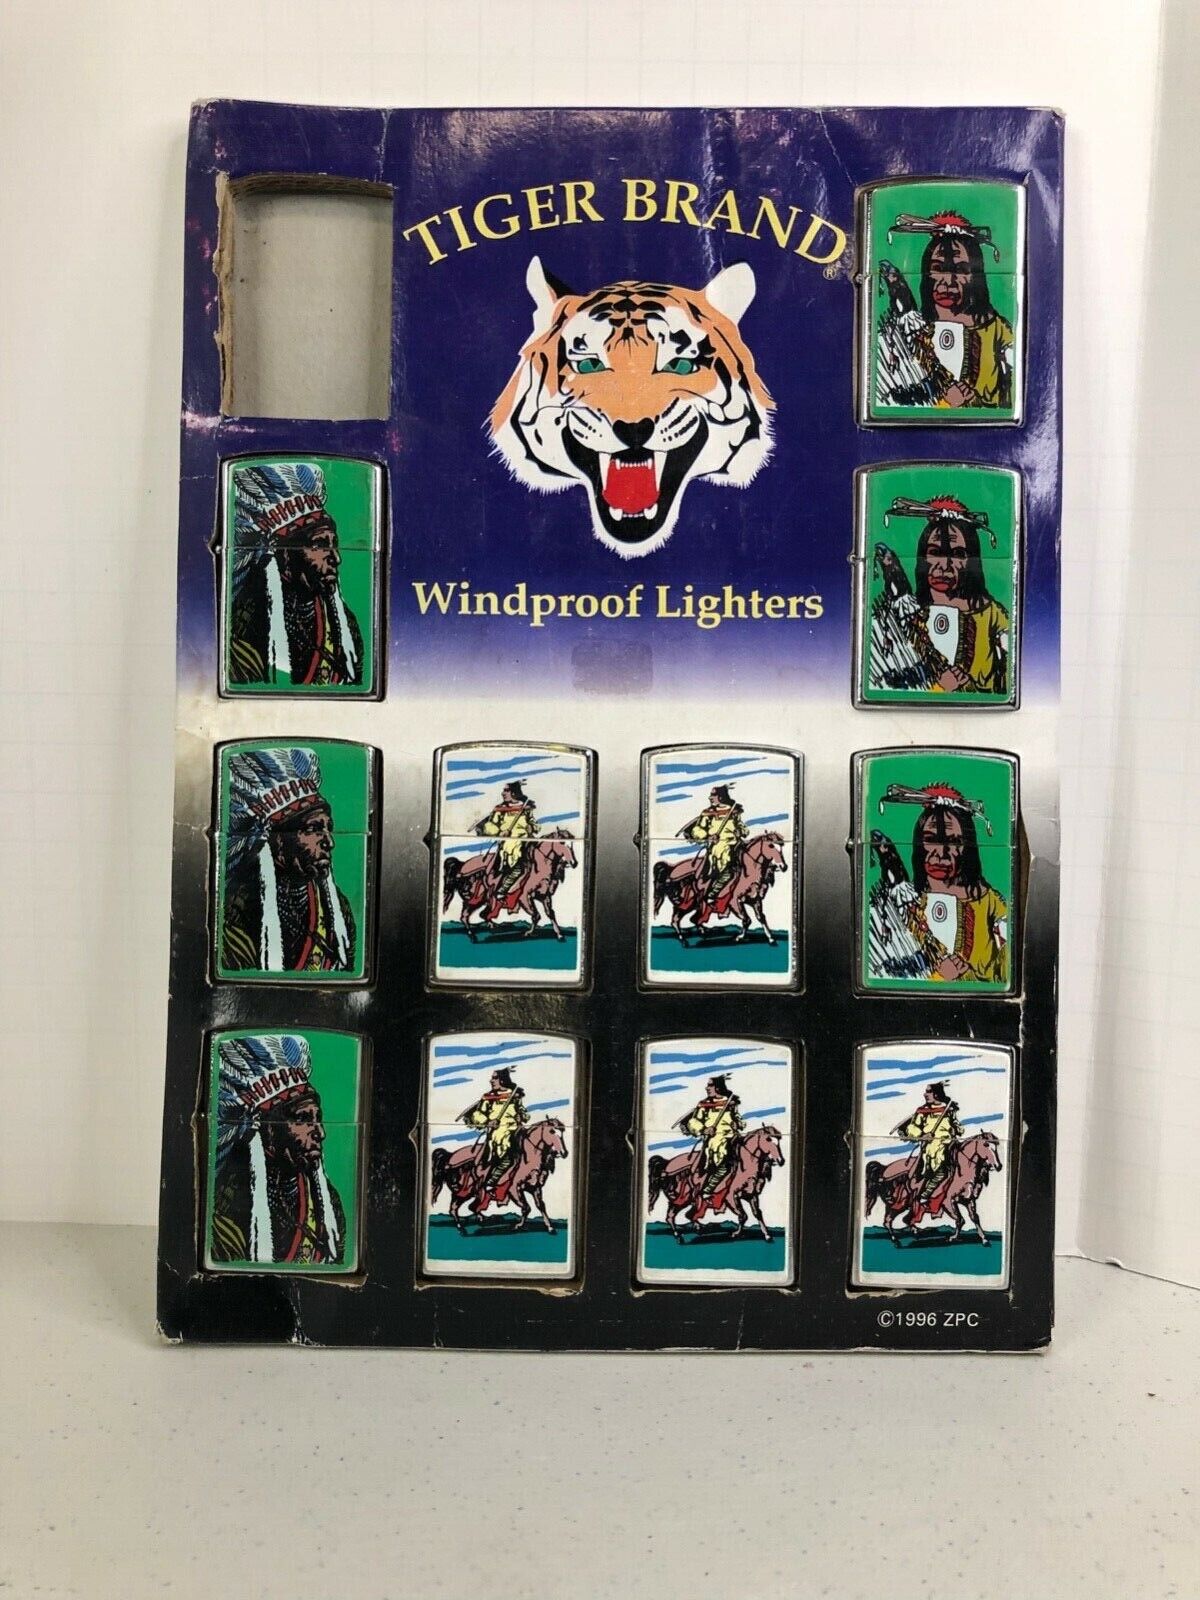 Tiger brand windproof lighters